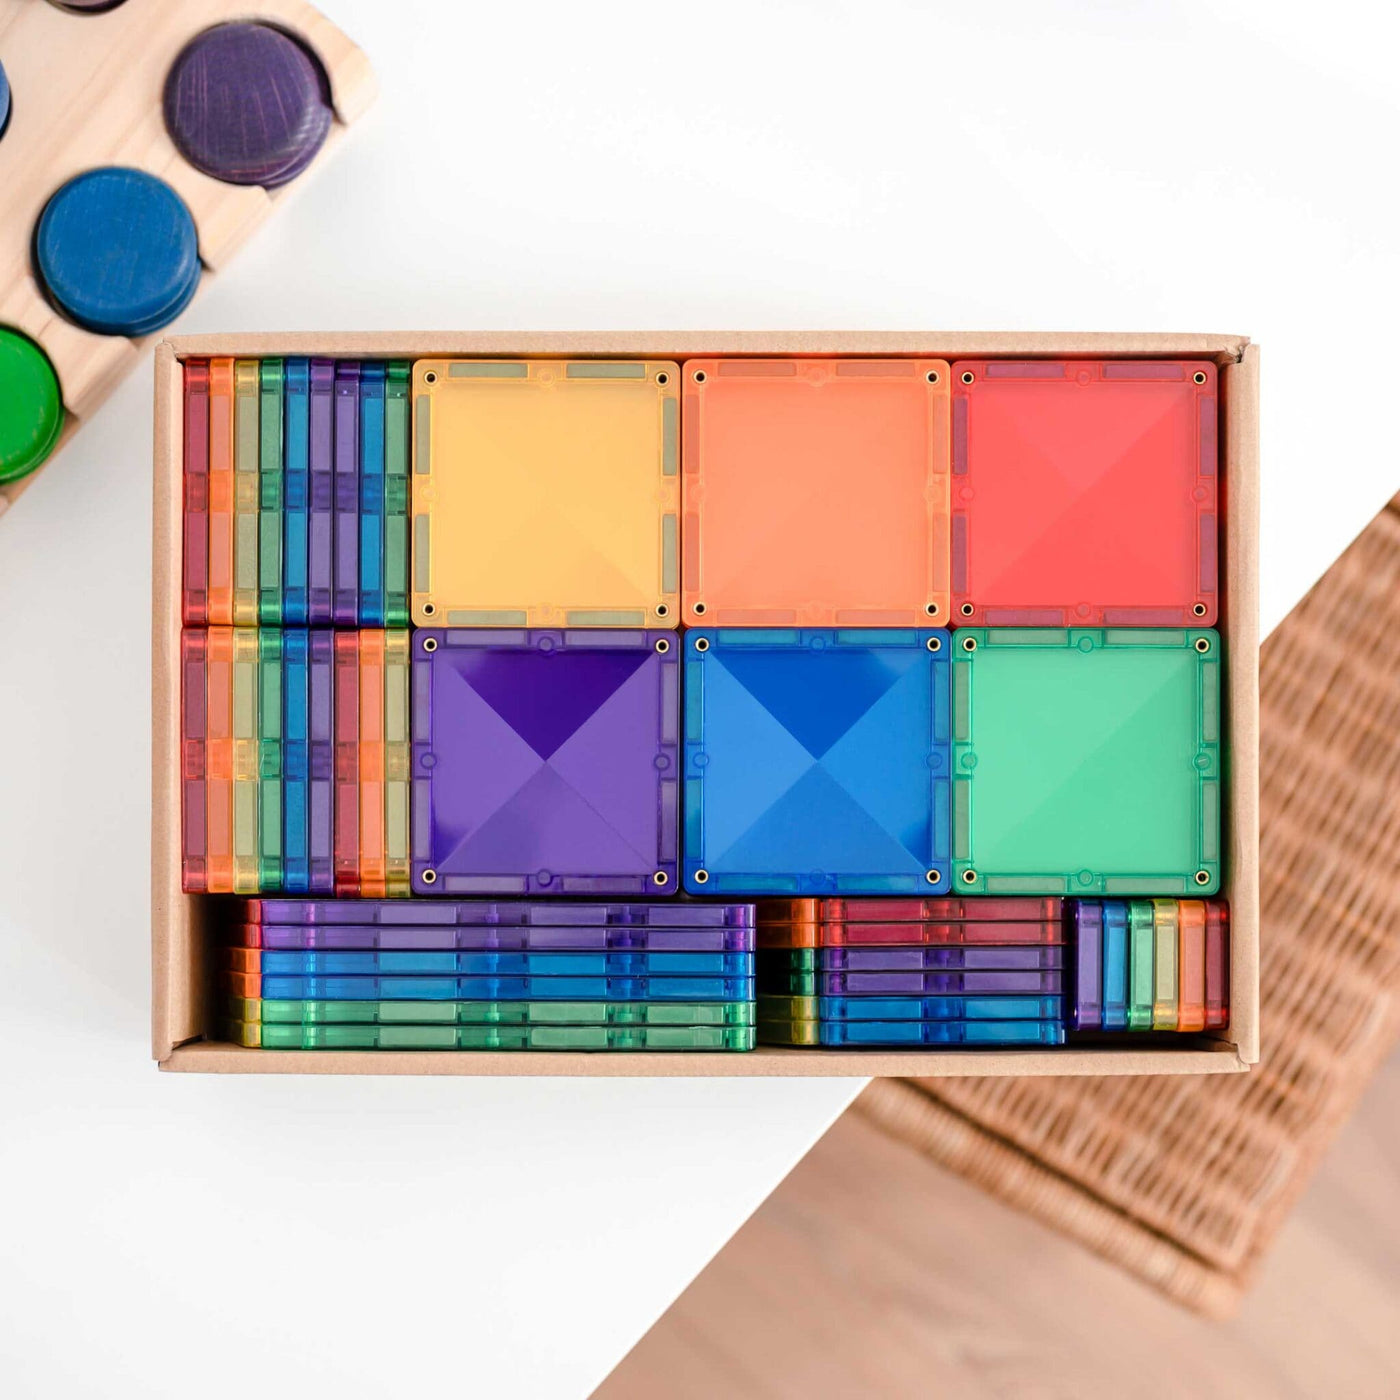 Connetix Tiles 102 Rainbow Piece Creative Pack